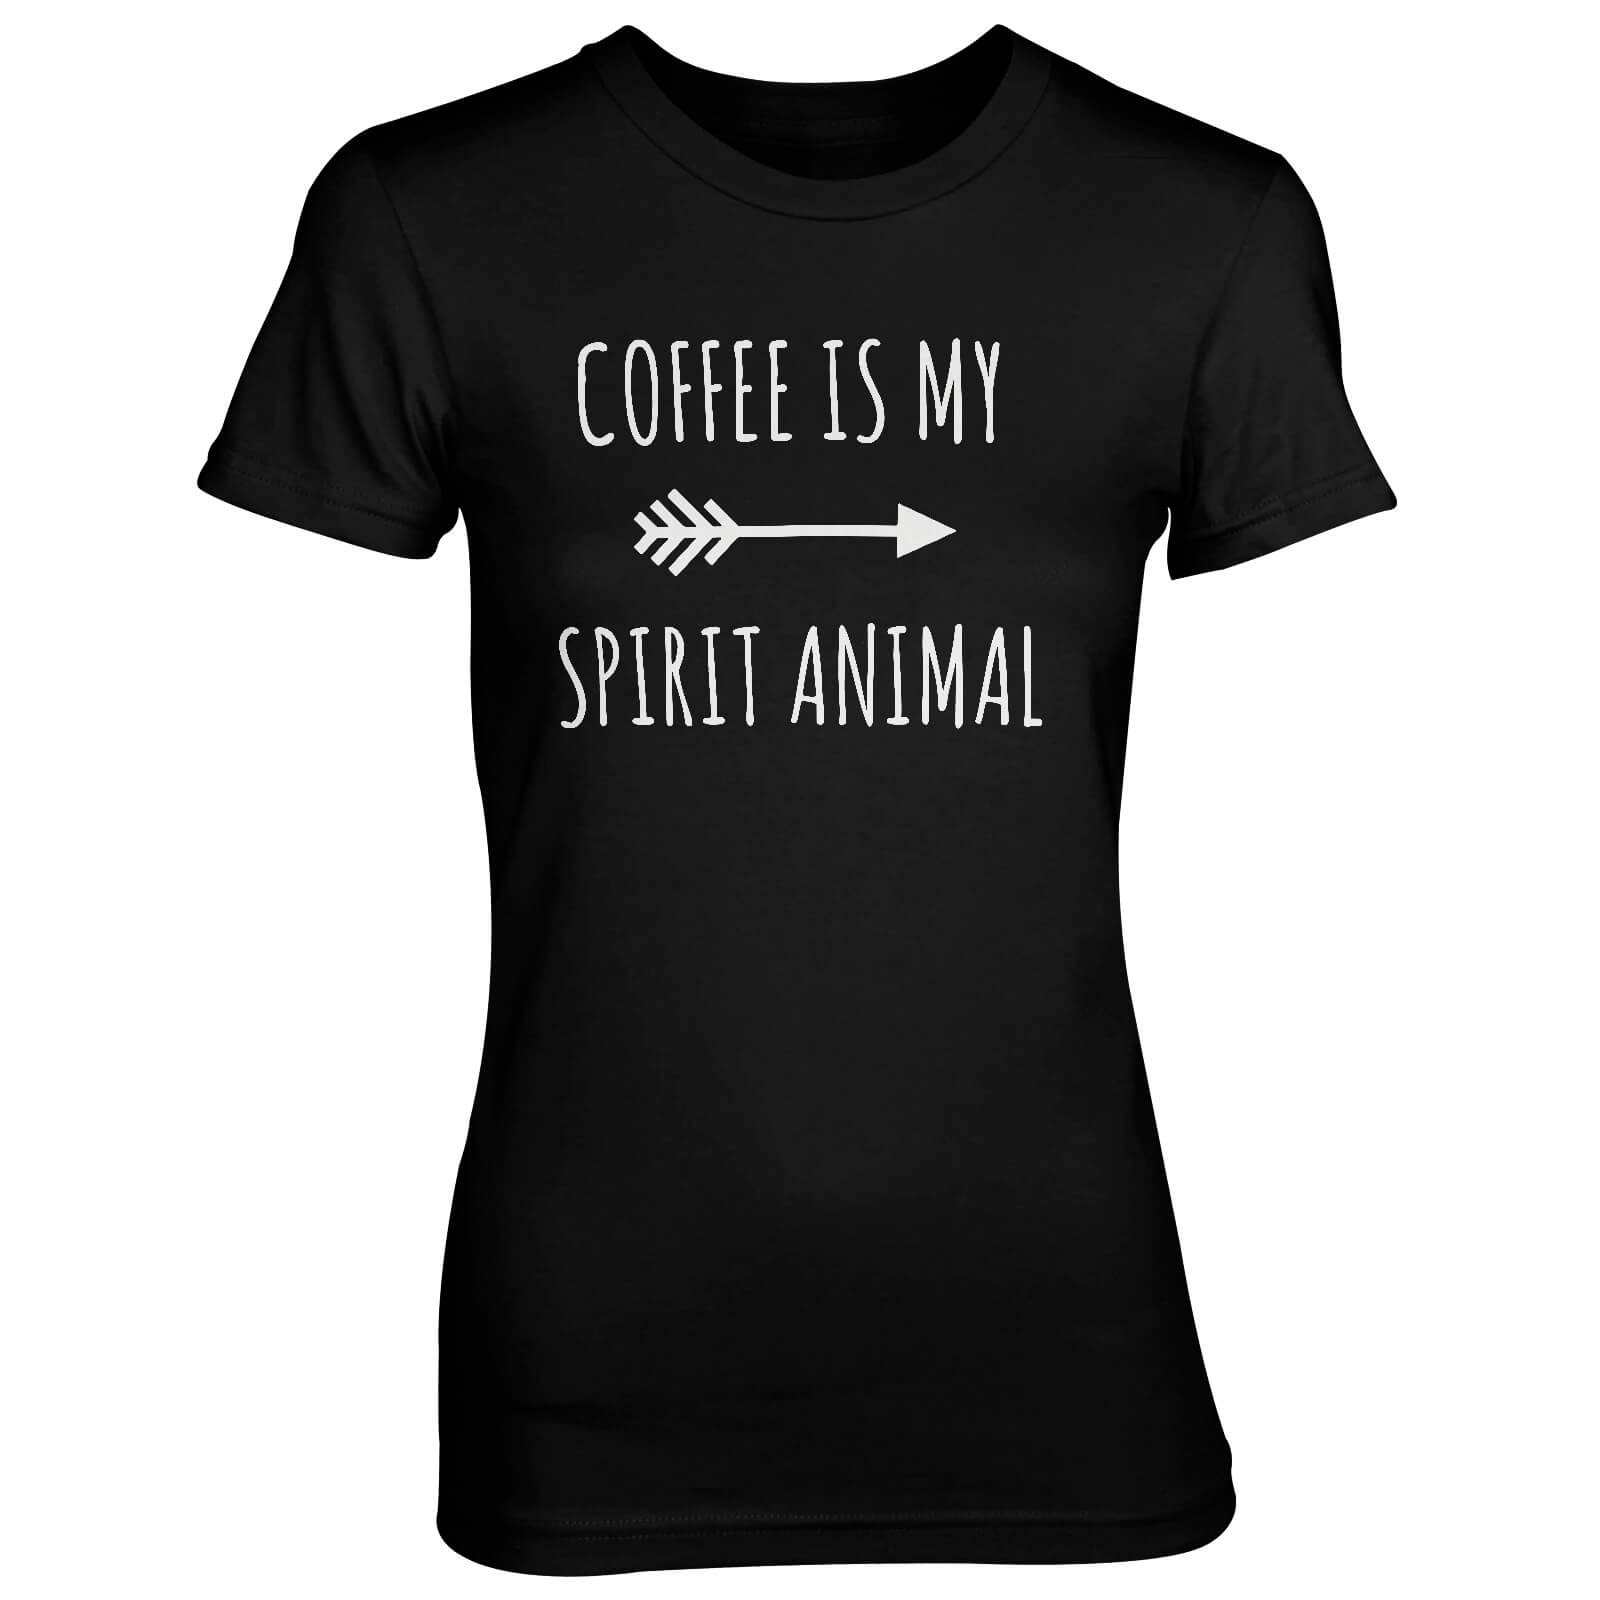 Coffee Is My Spirit Animal Women's Black T-Shirt - S - Black